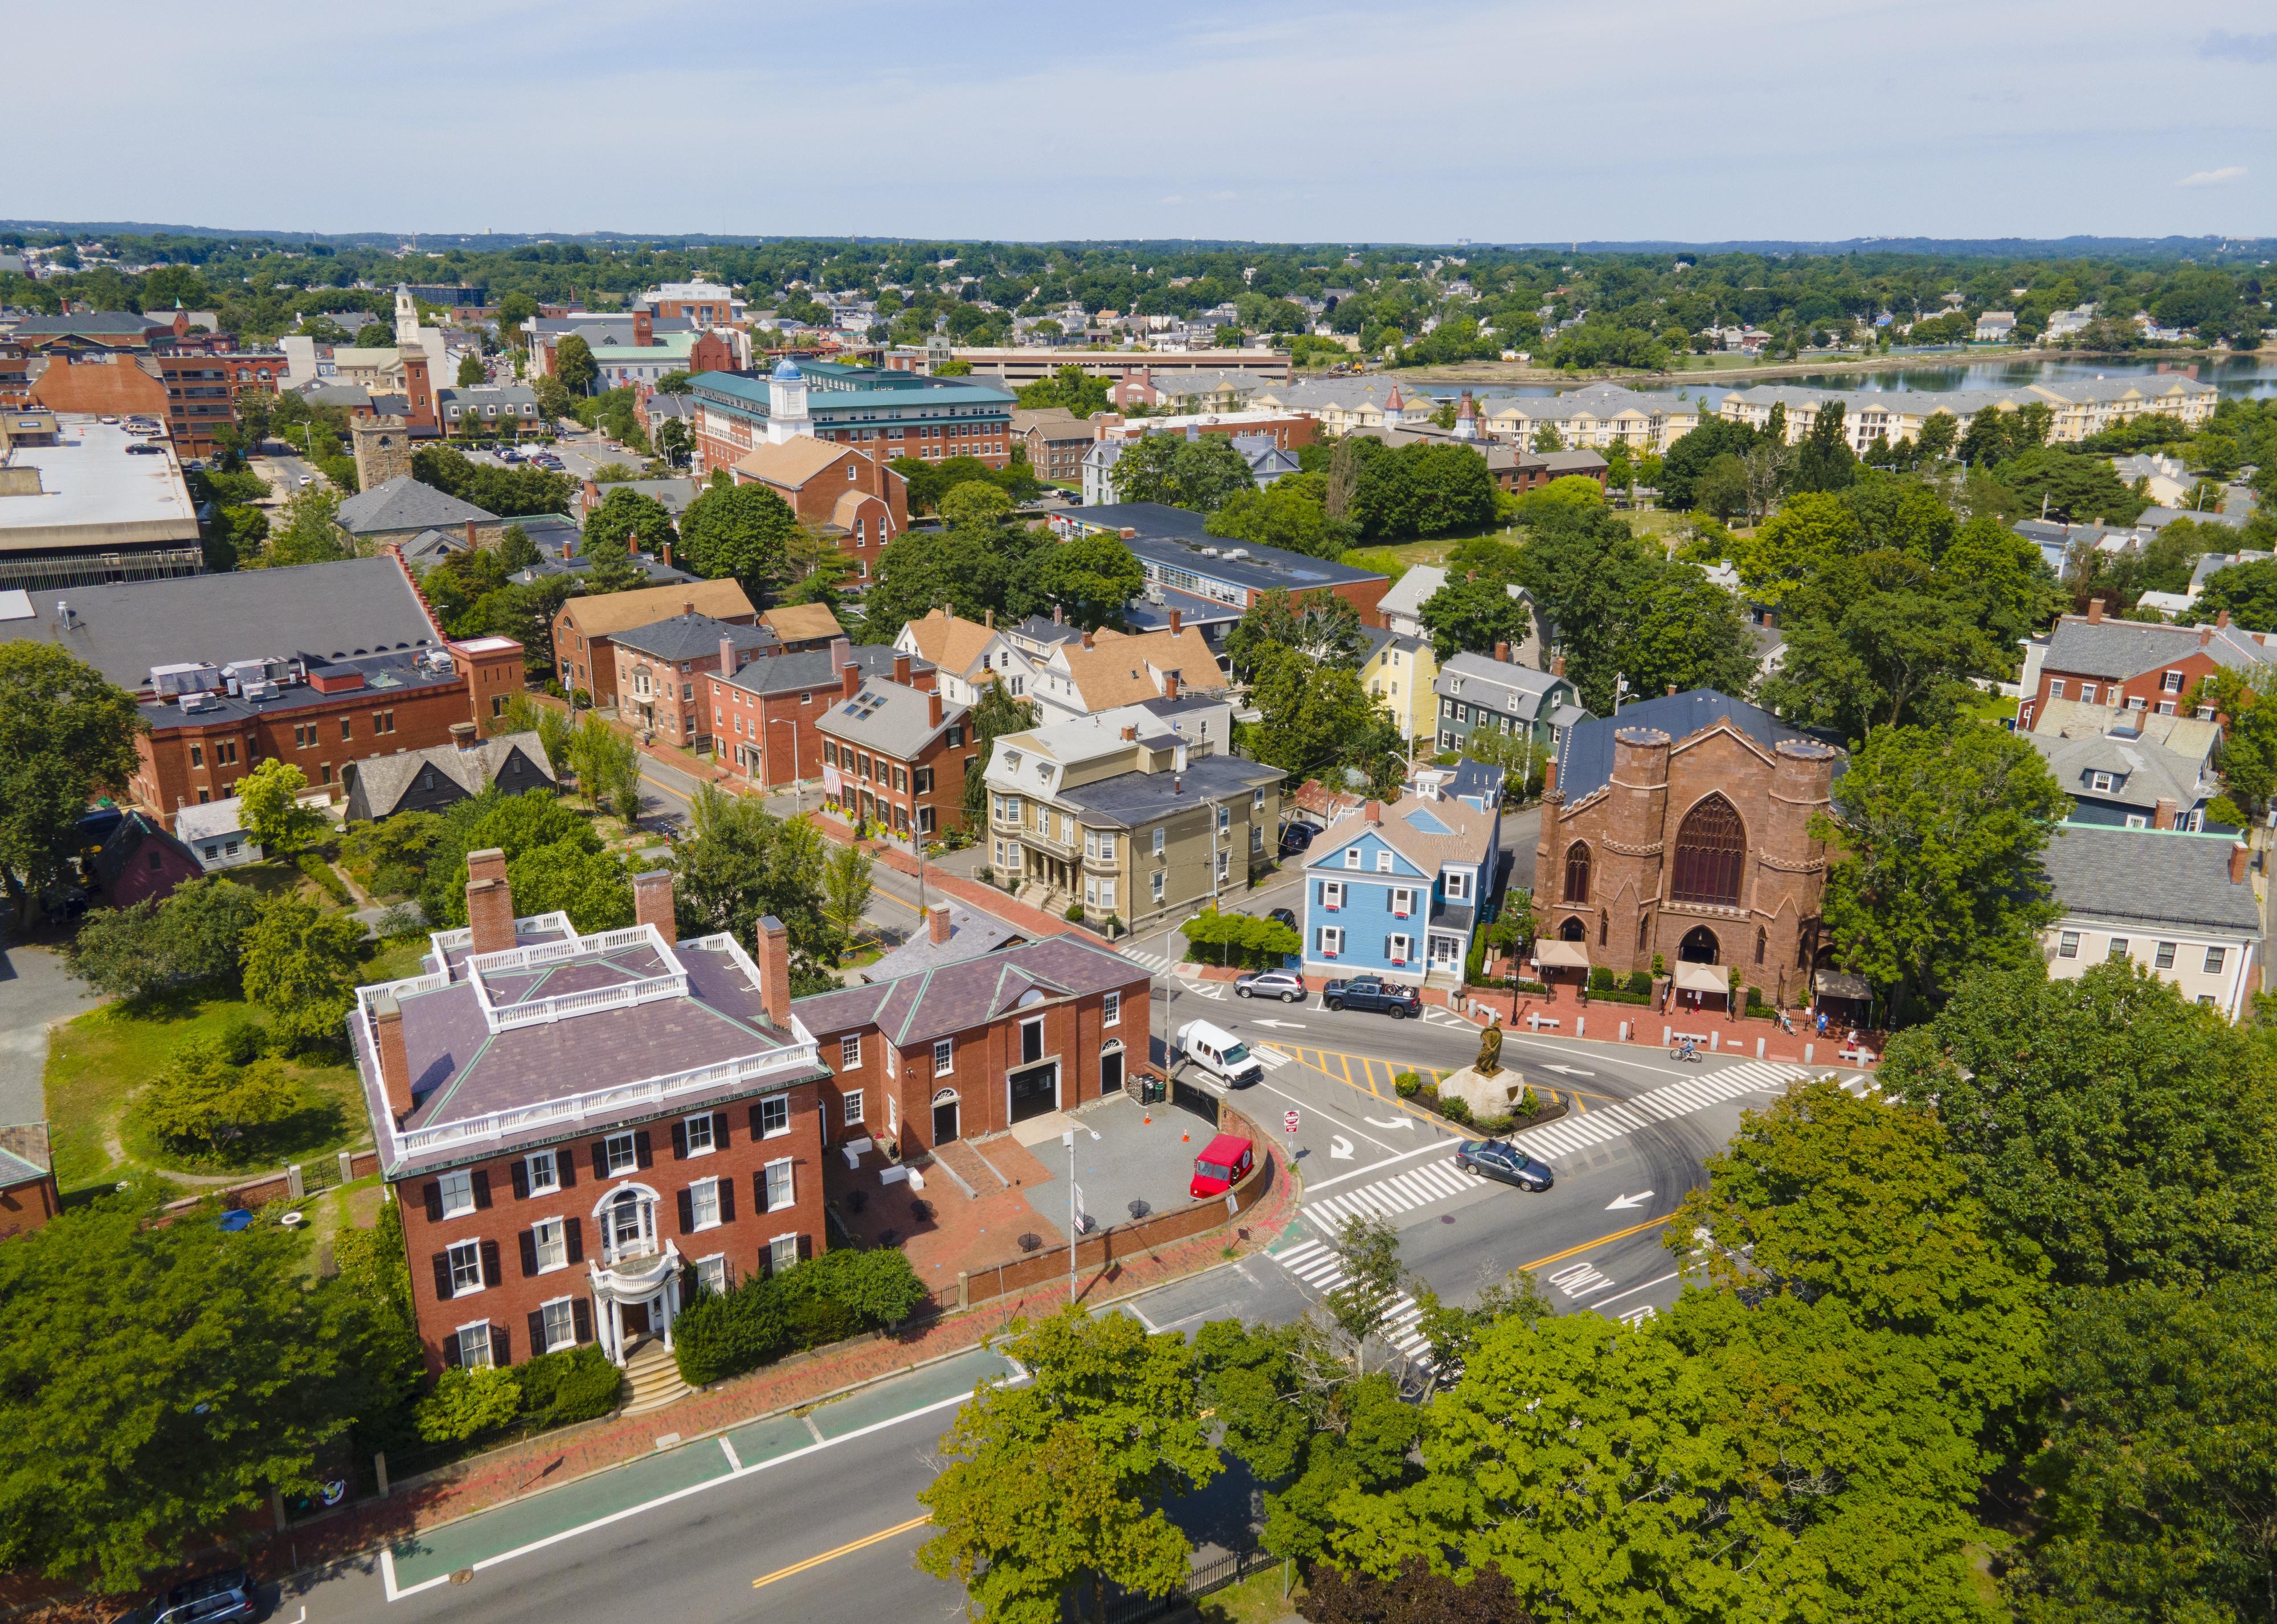 Aerial view of Salem historic city center.